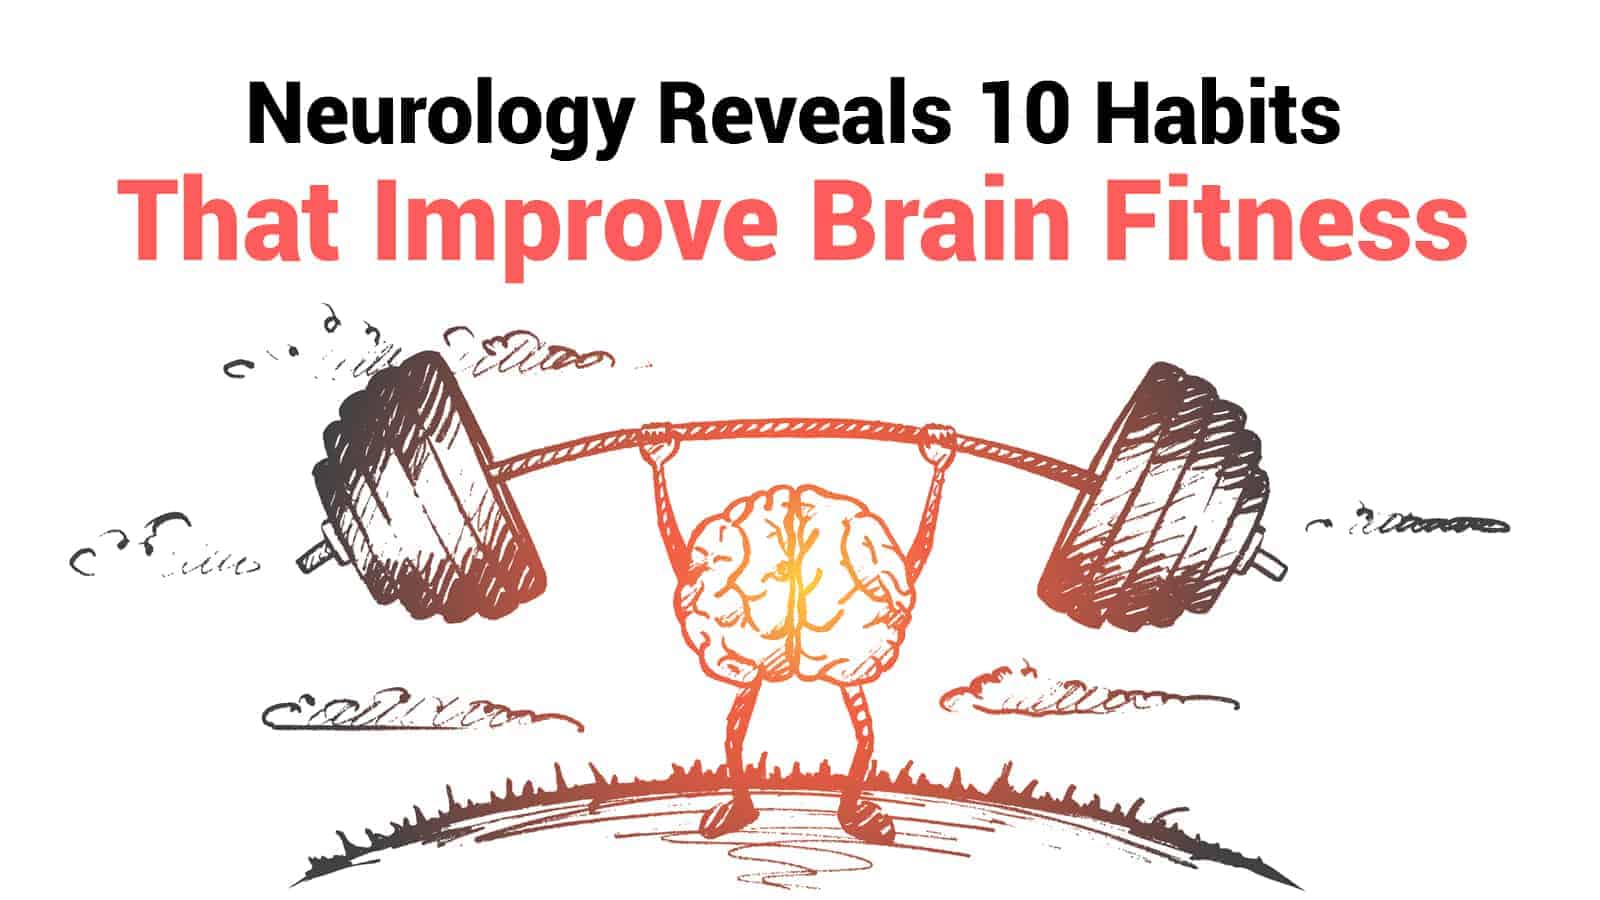 Neurology Reveals 10 Habits That Improve Brain Fitness